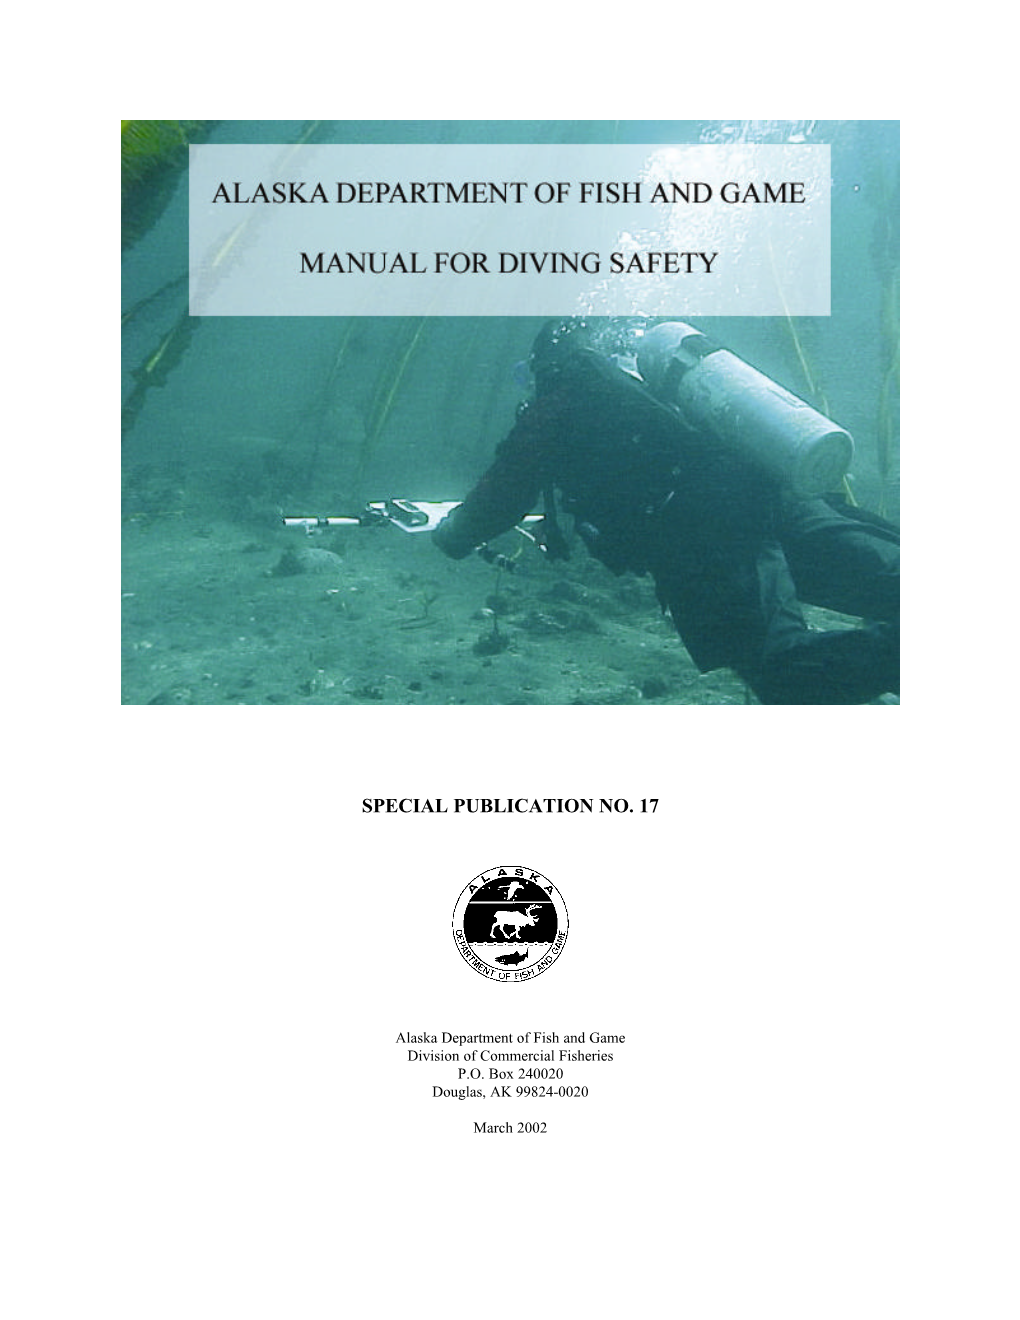 Alaska Department of Fish and Game Dive Saftey Manual